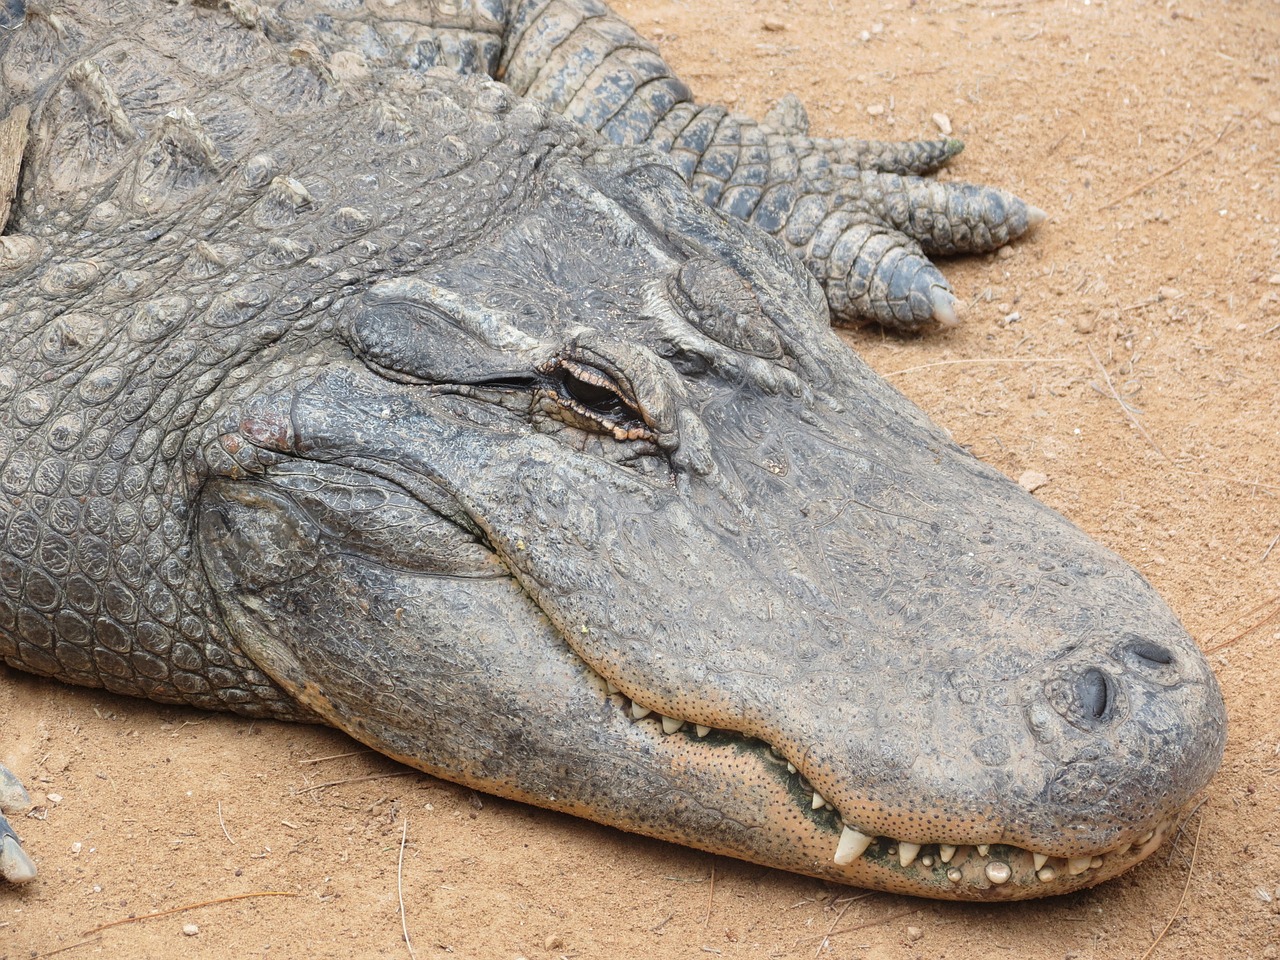 alligator sand the teeth of the free photo